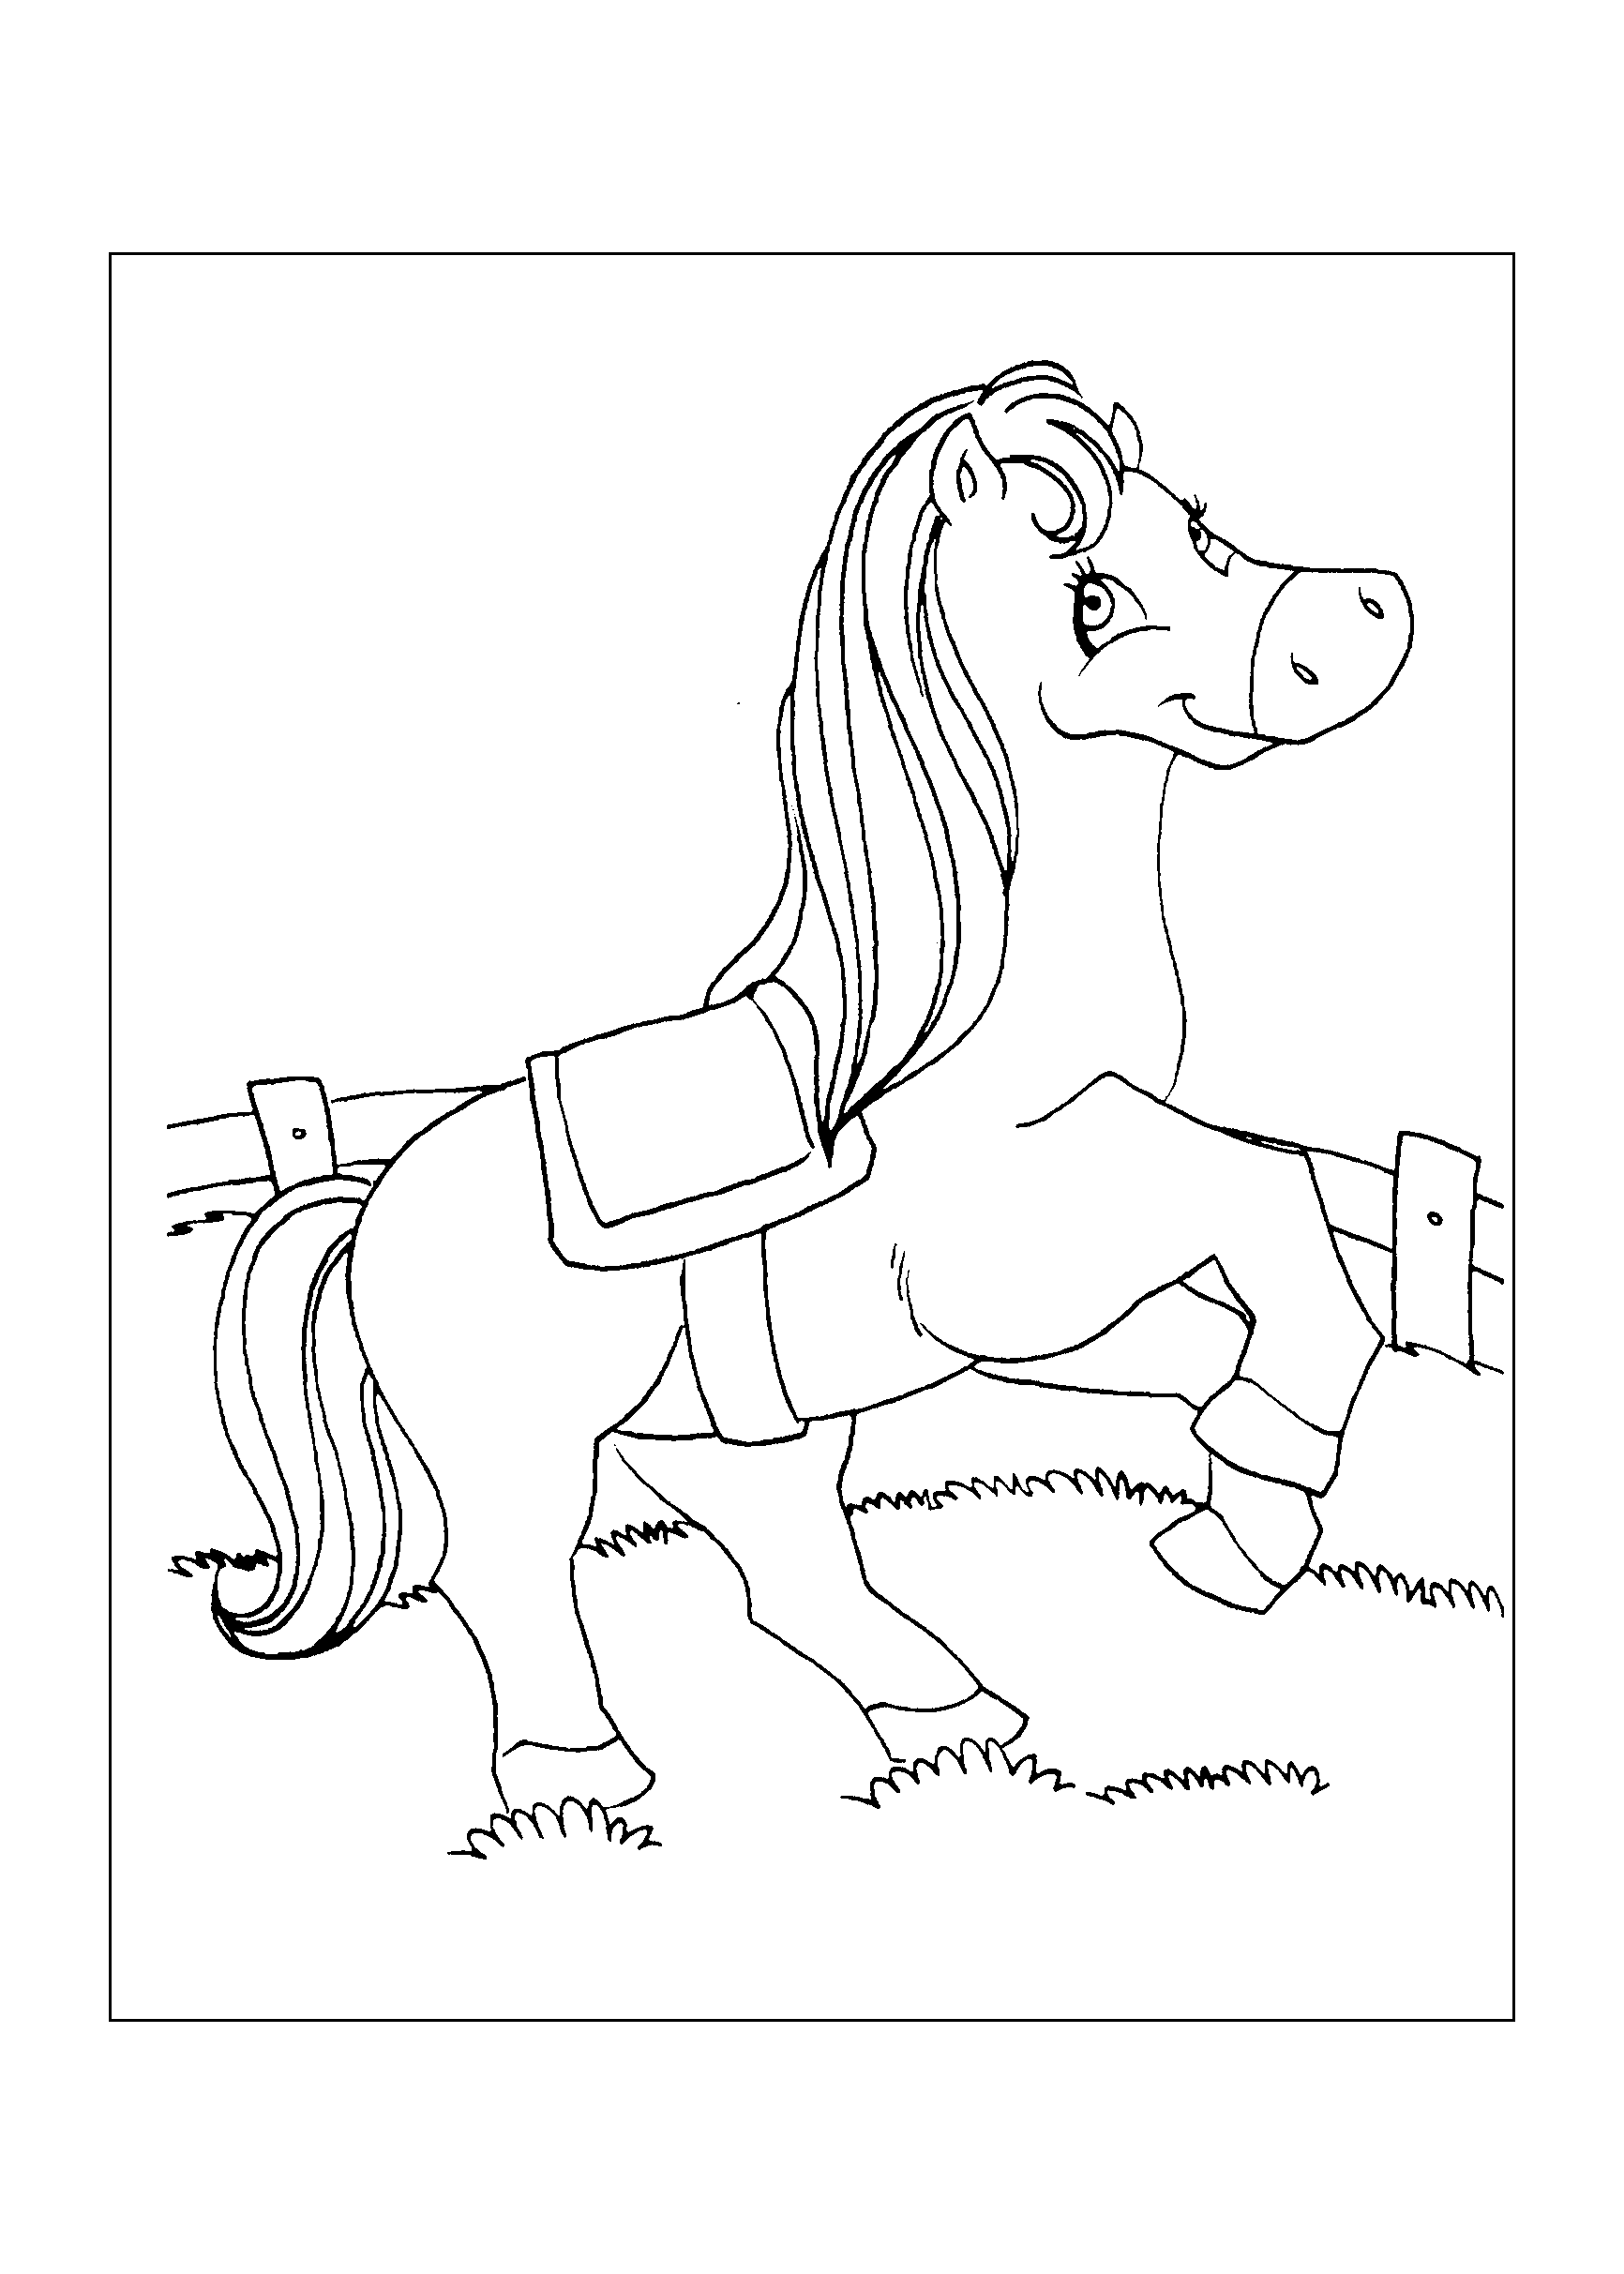 0174-desenho-colorir-egua